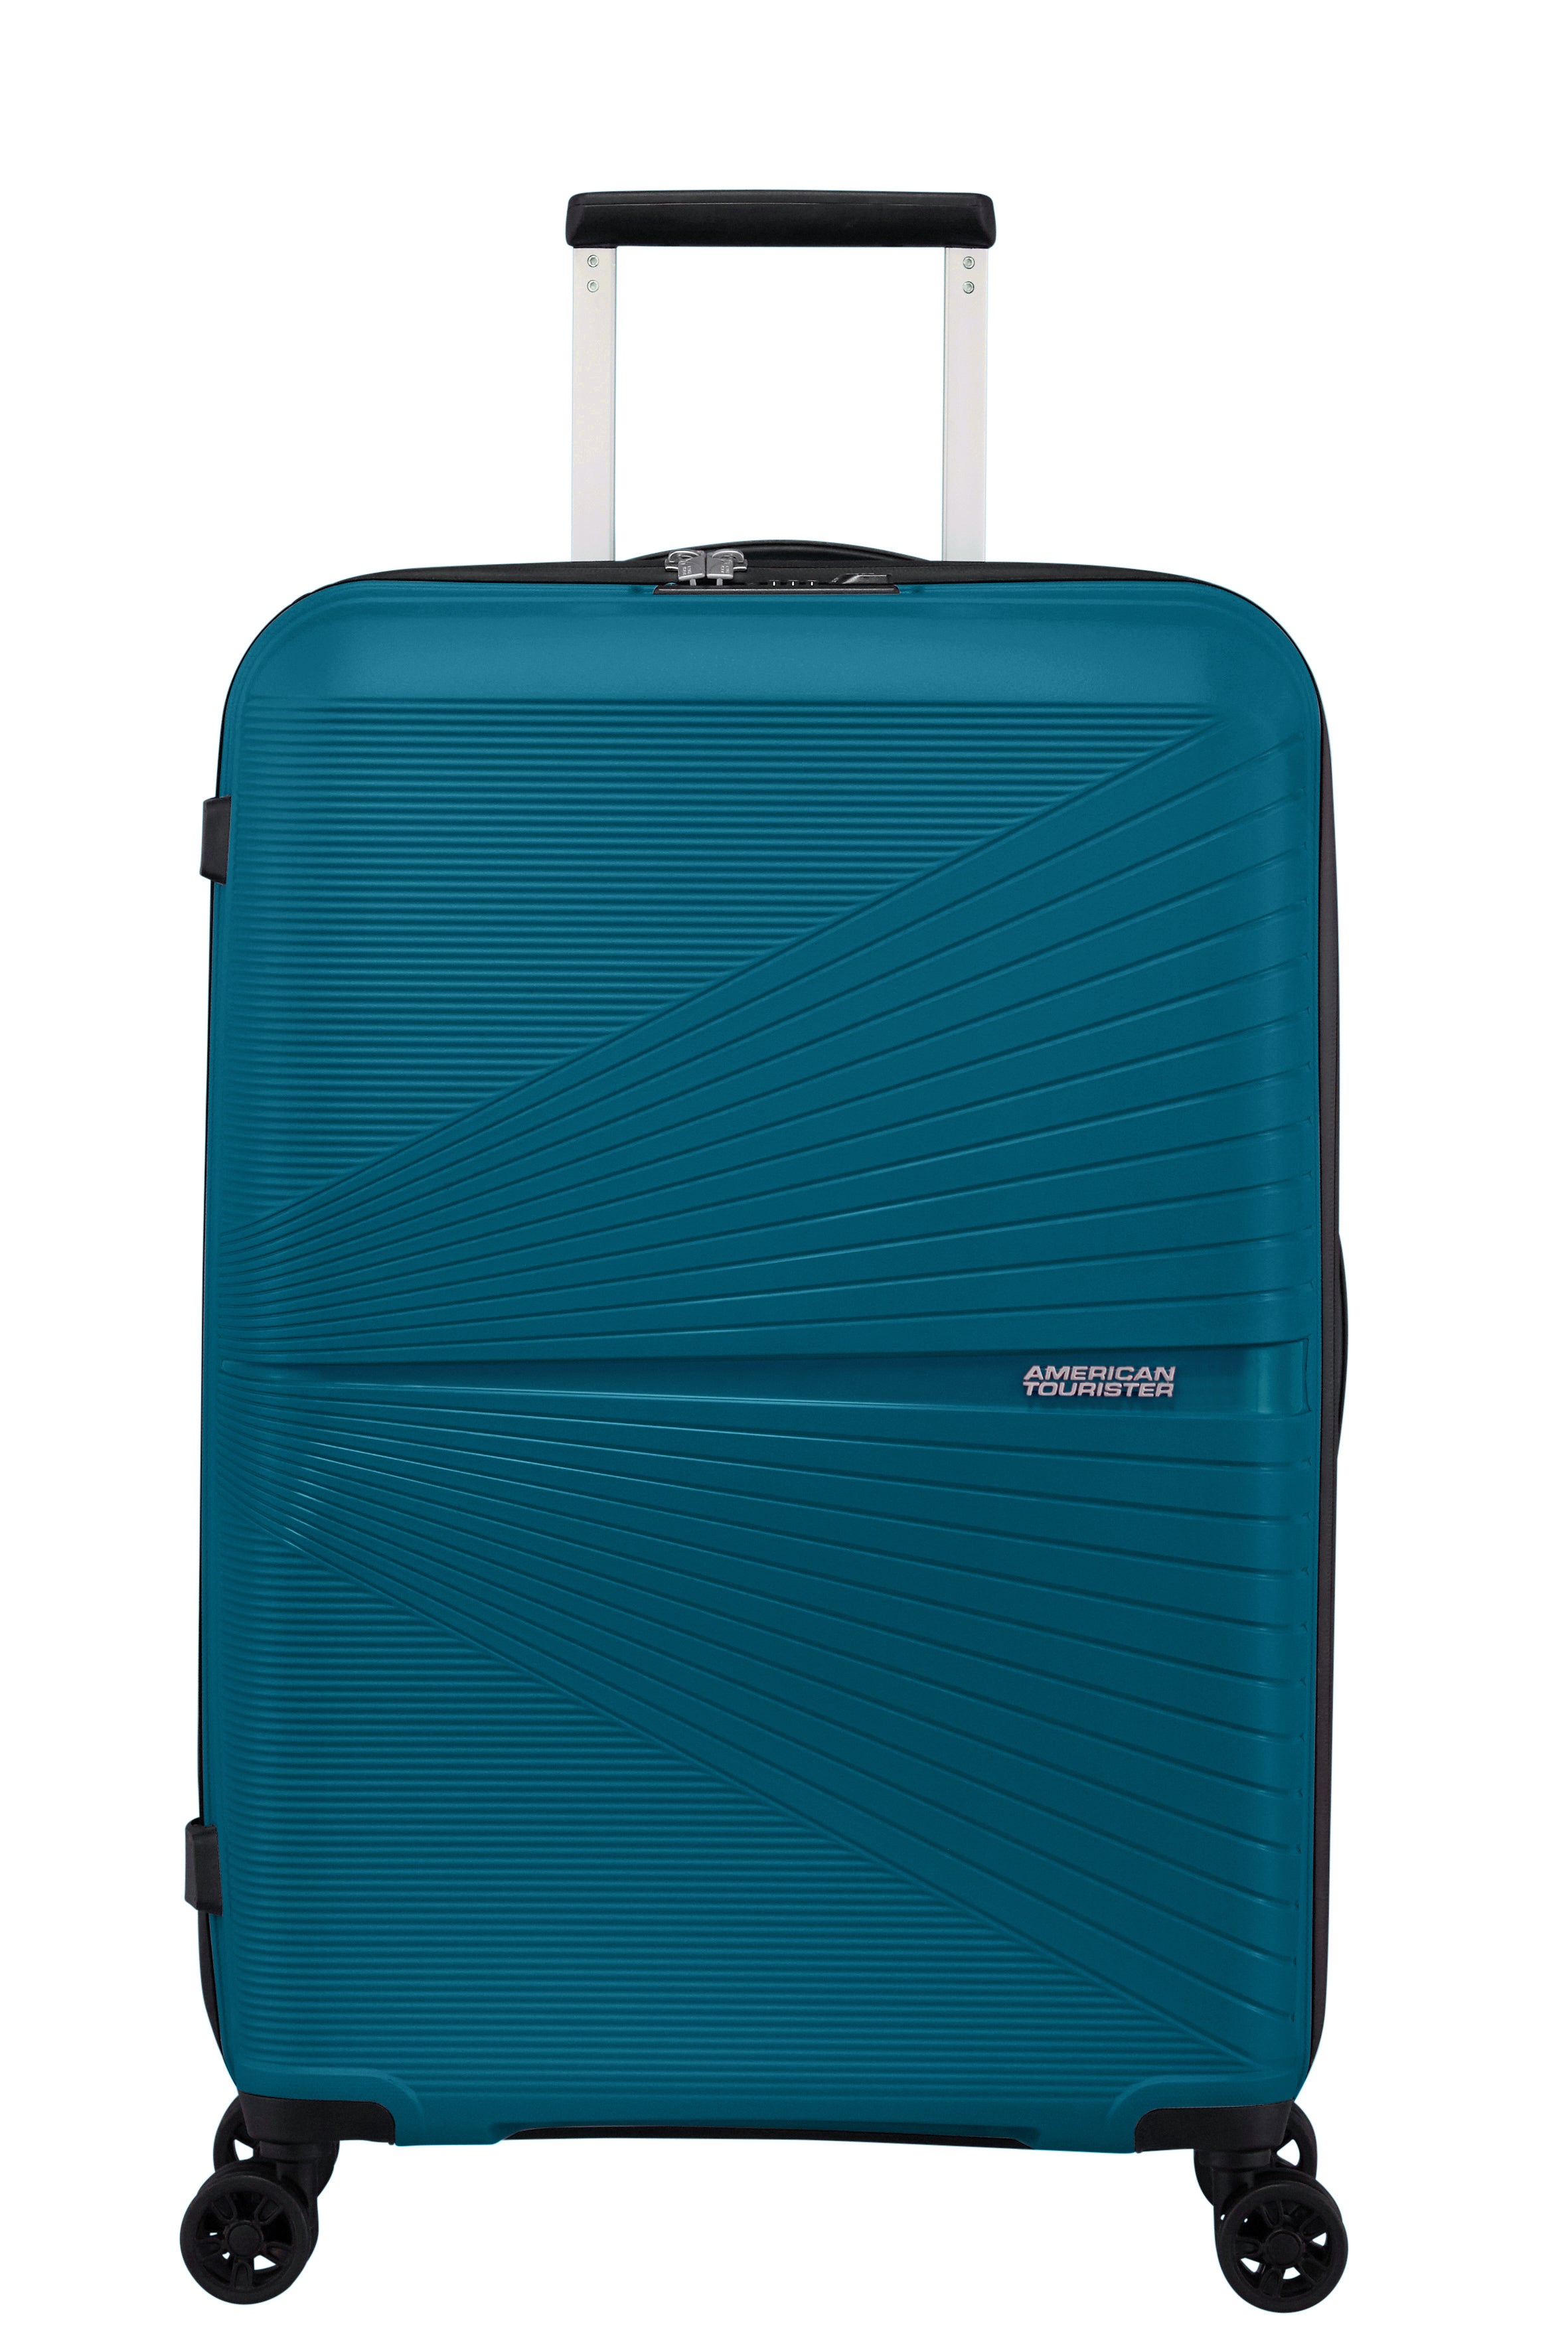 American Tourister - Airconic 67cm Medium Suitcase - Deep Ocean - 0